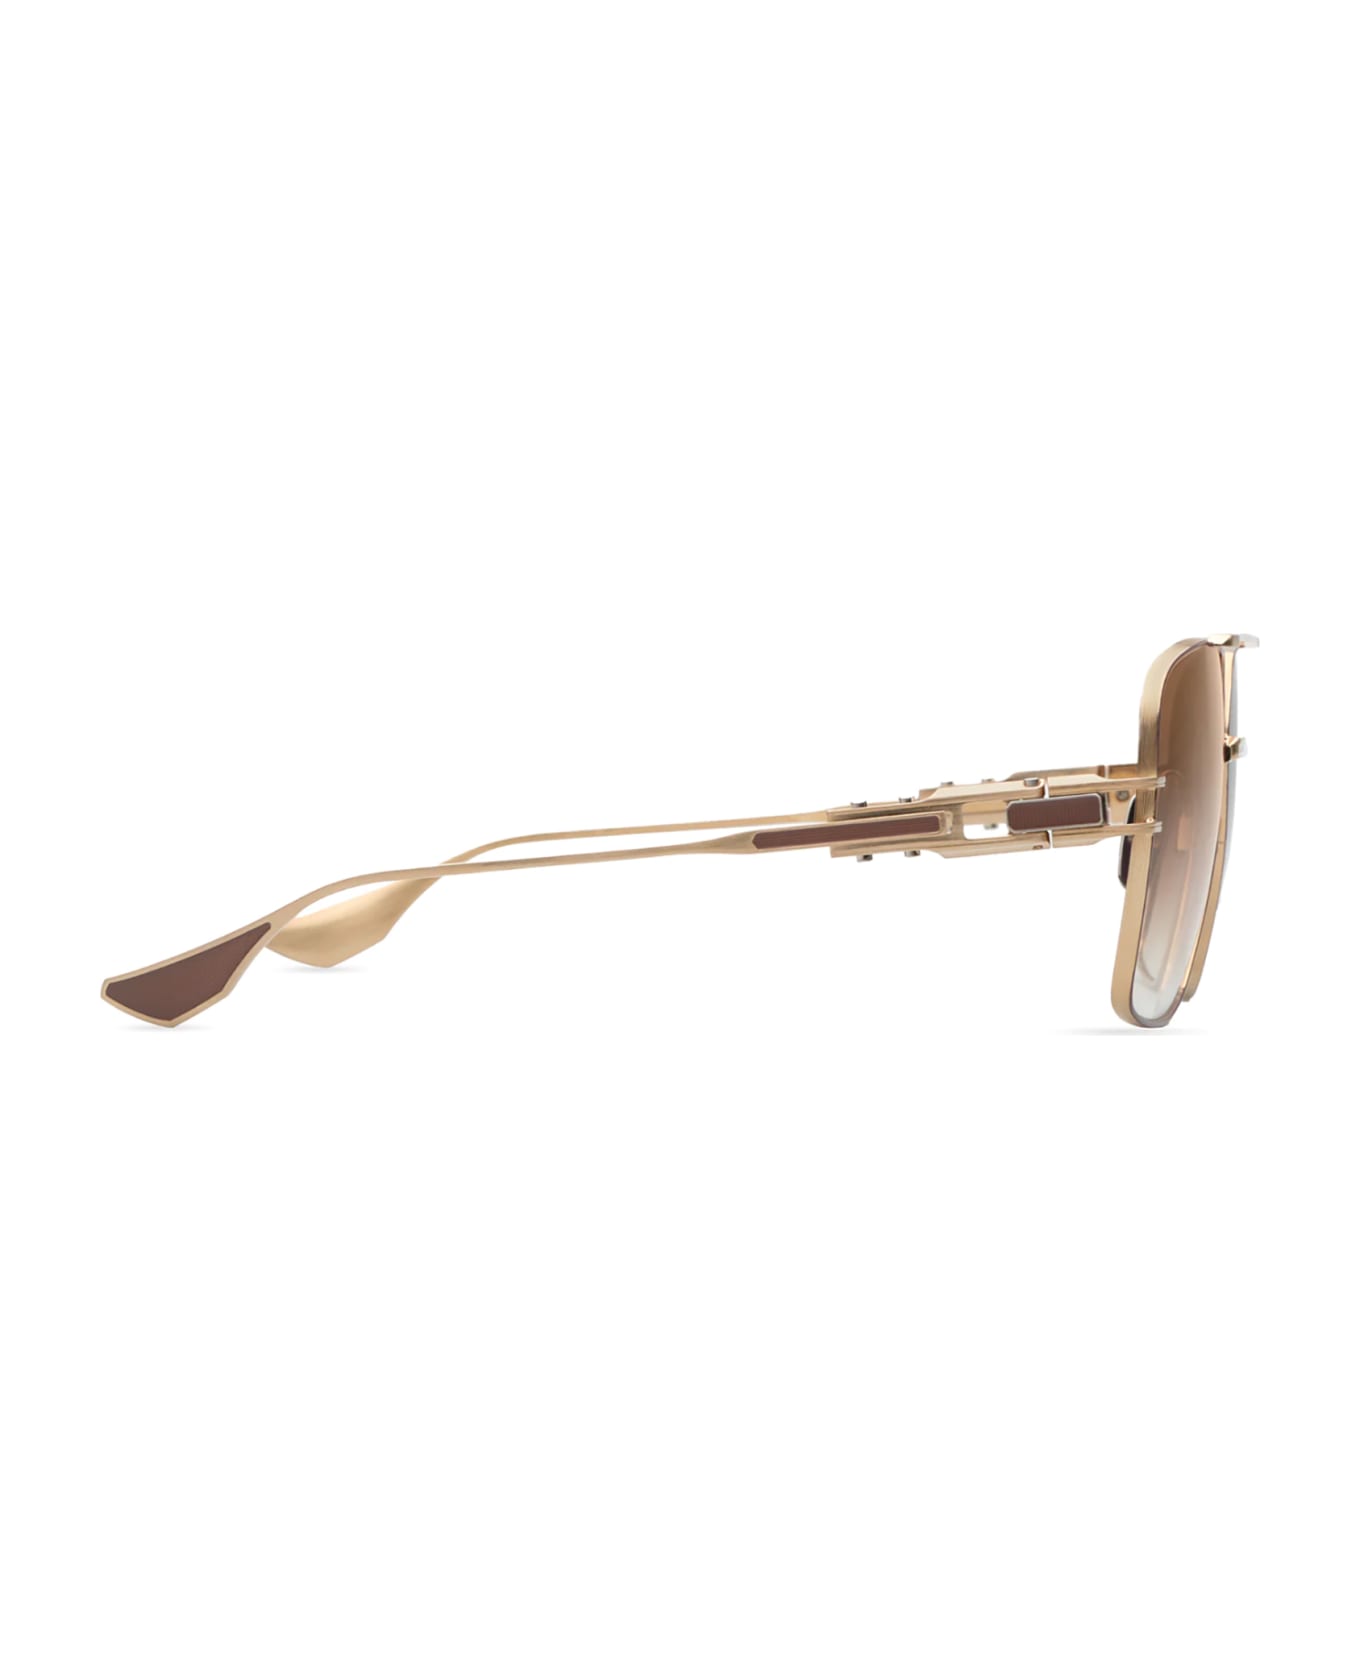 Dita DTS159/A/05 GRAND/EMPERIK Sunglasses - Brushed White Gold